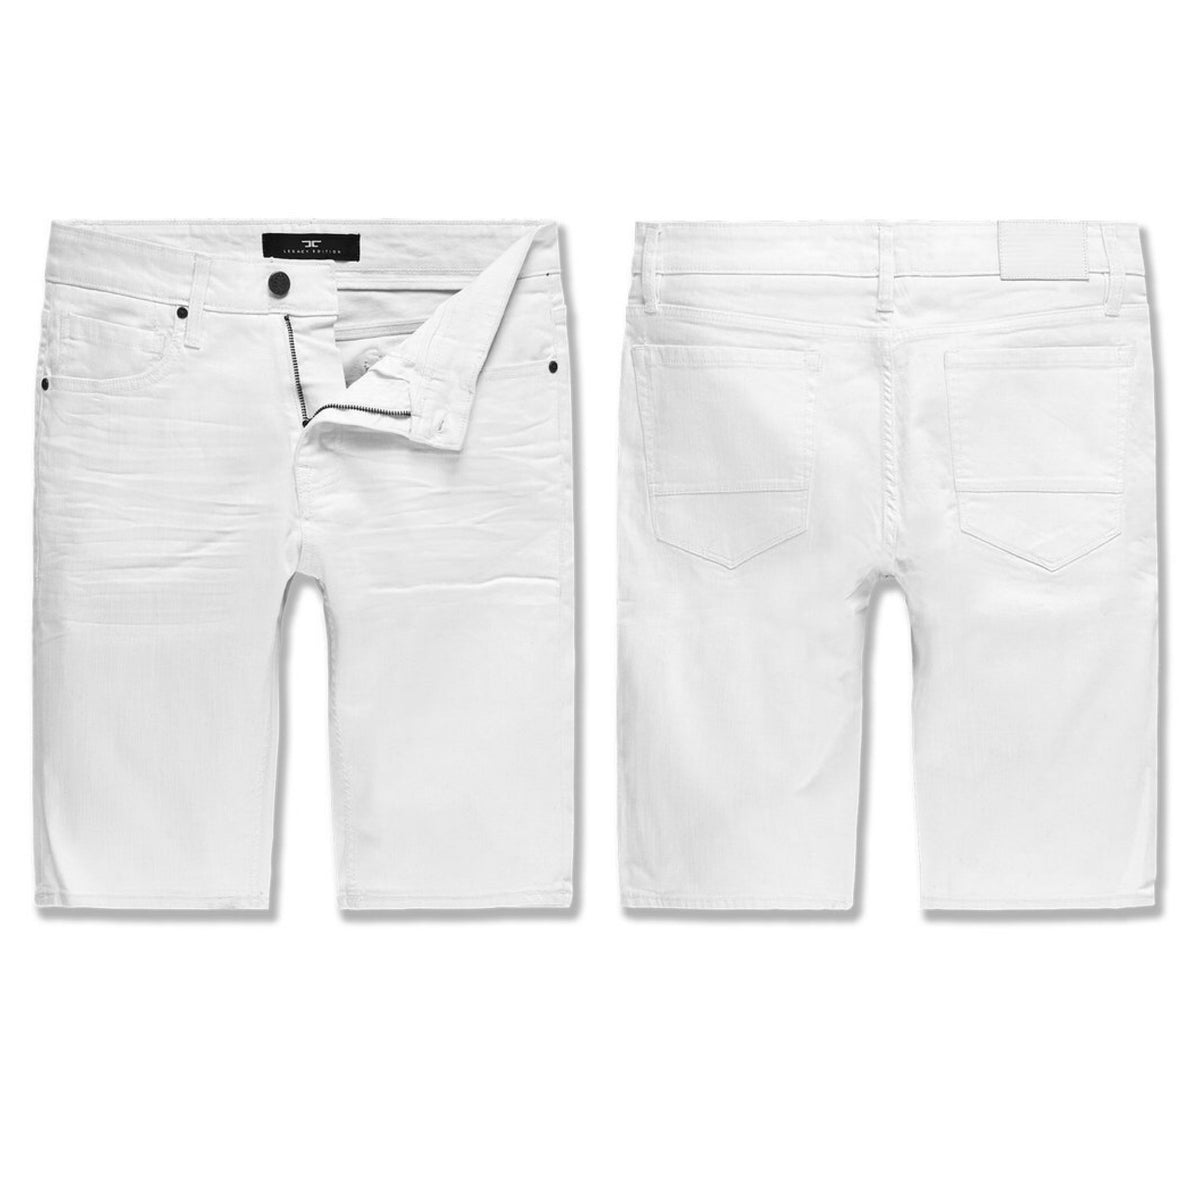 Jordan Craig - Nashville Retro Slub Shorts - White (J3173S)